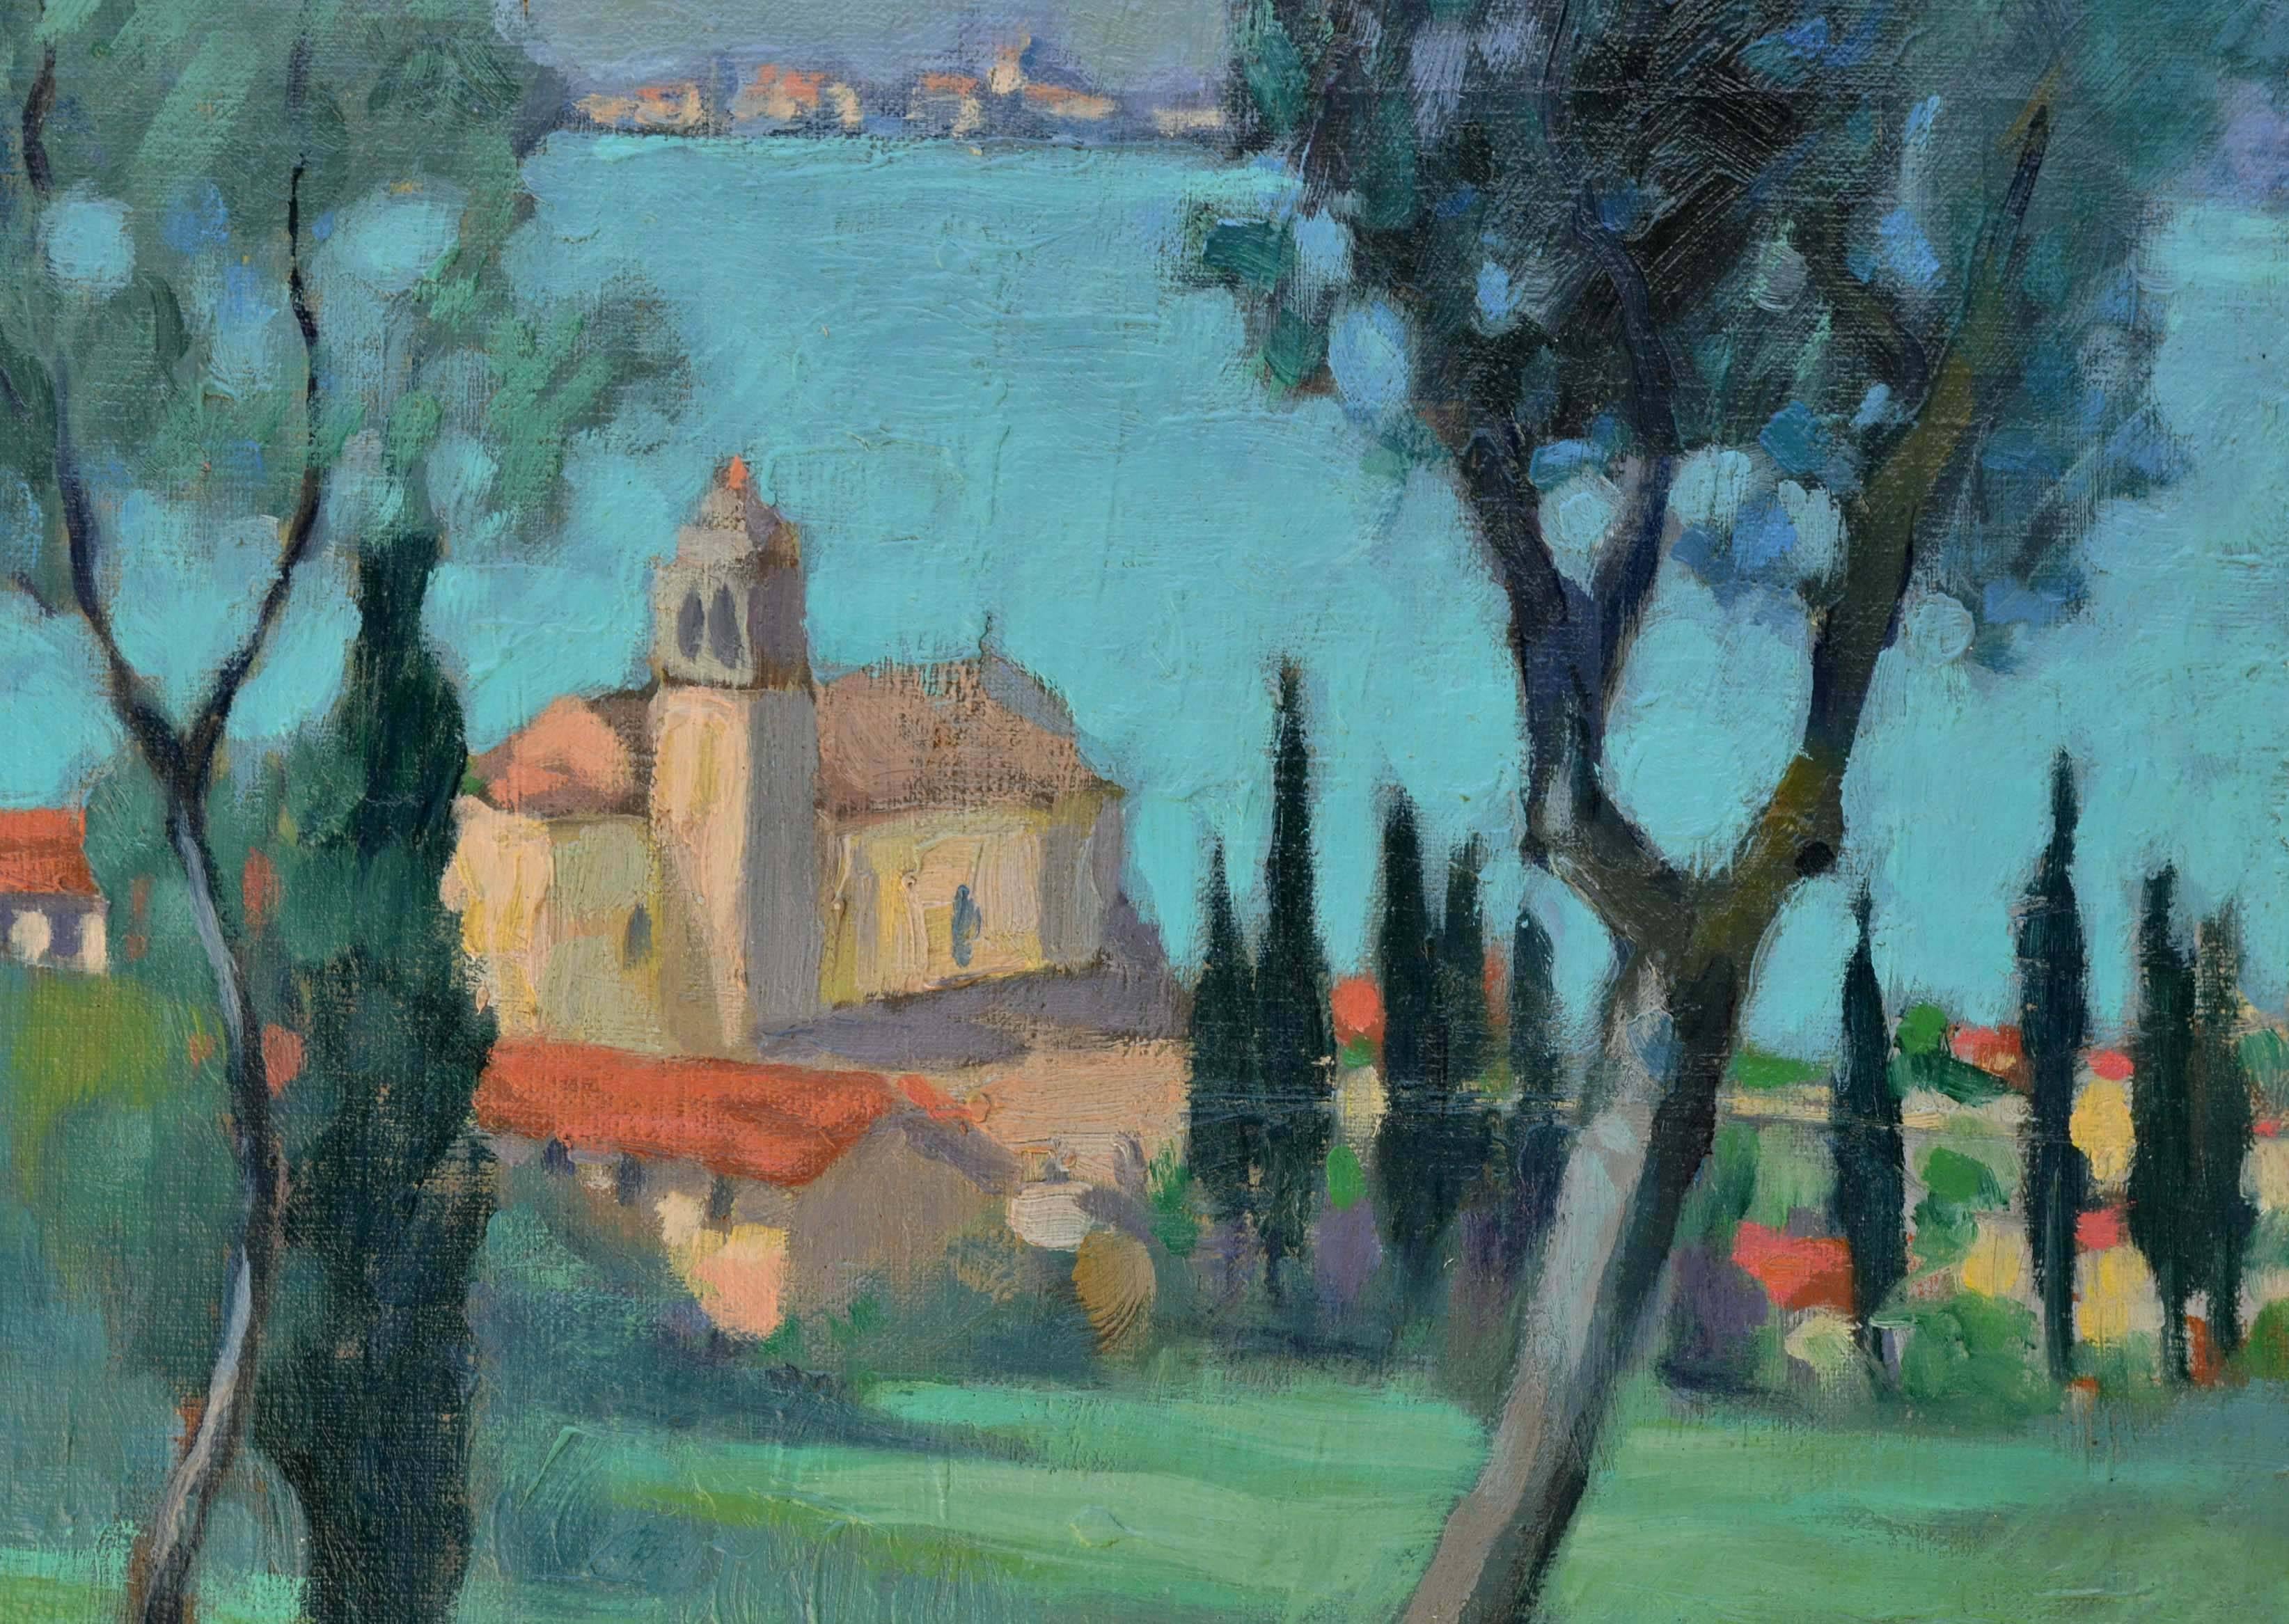 Lake Garda, Italy - Impressionist Painting by George J. Seideneck